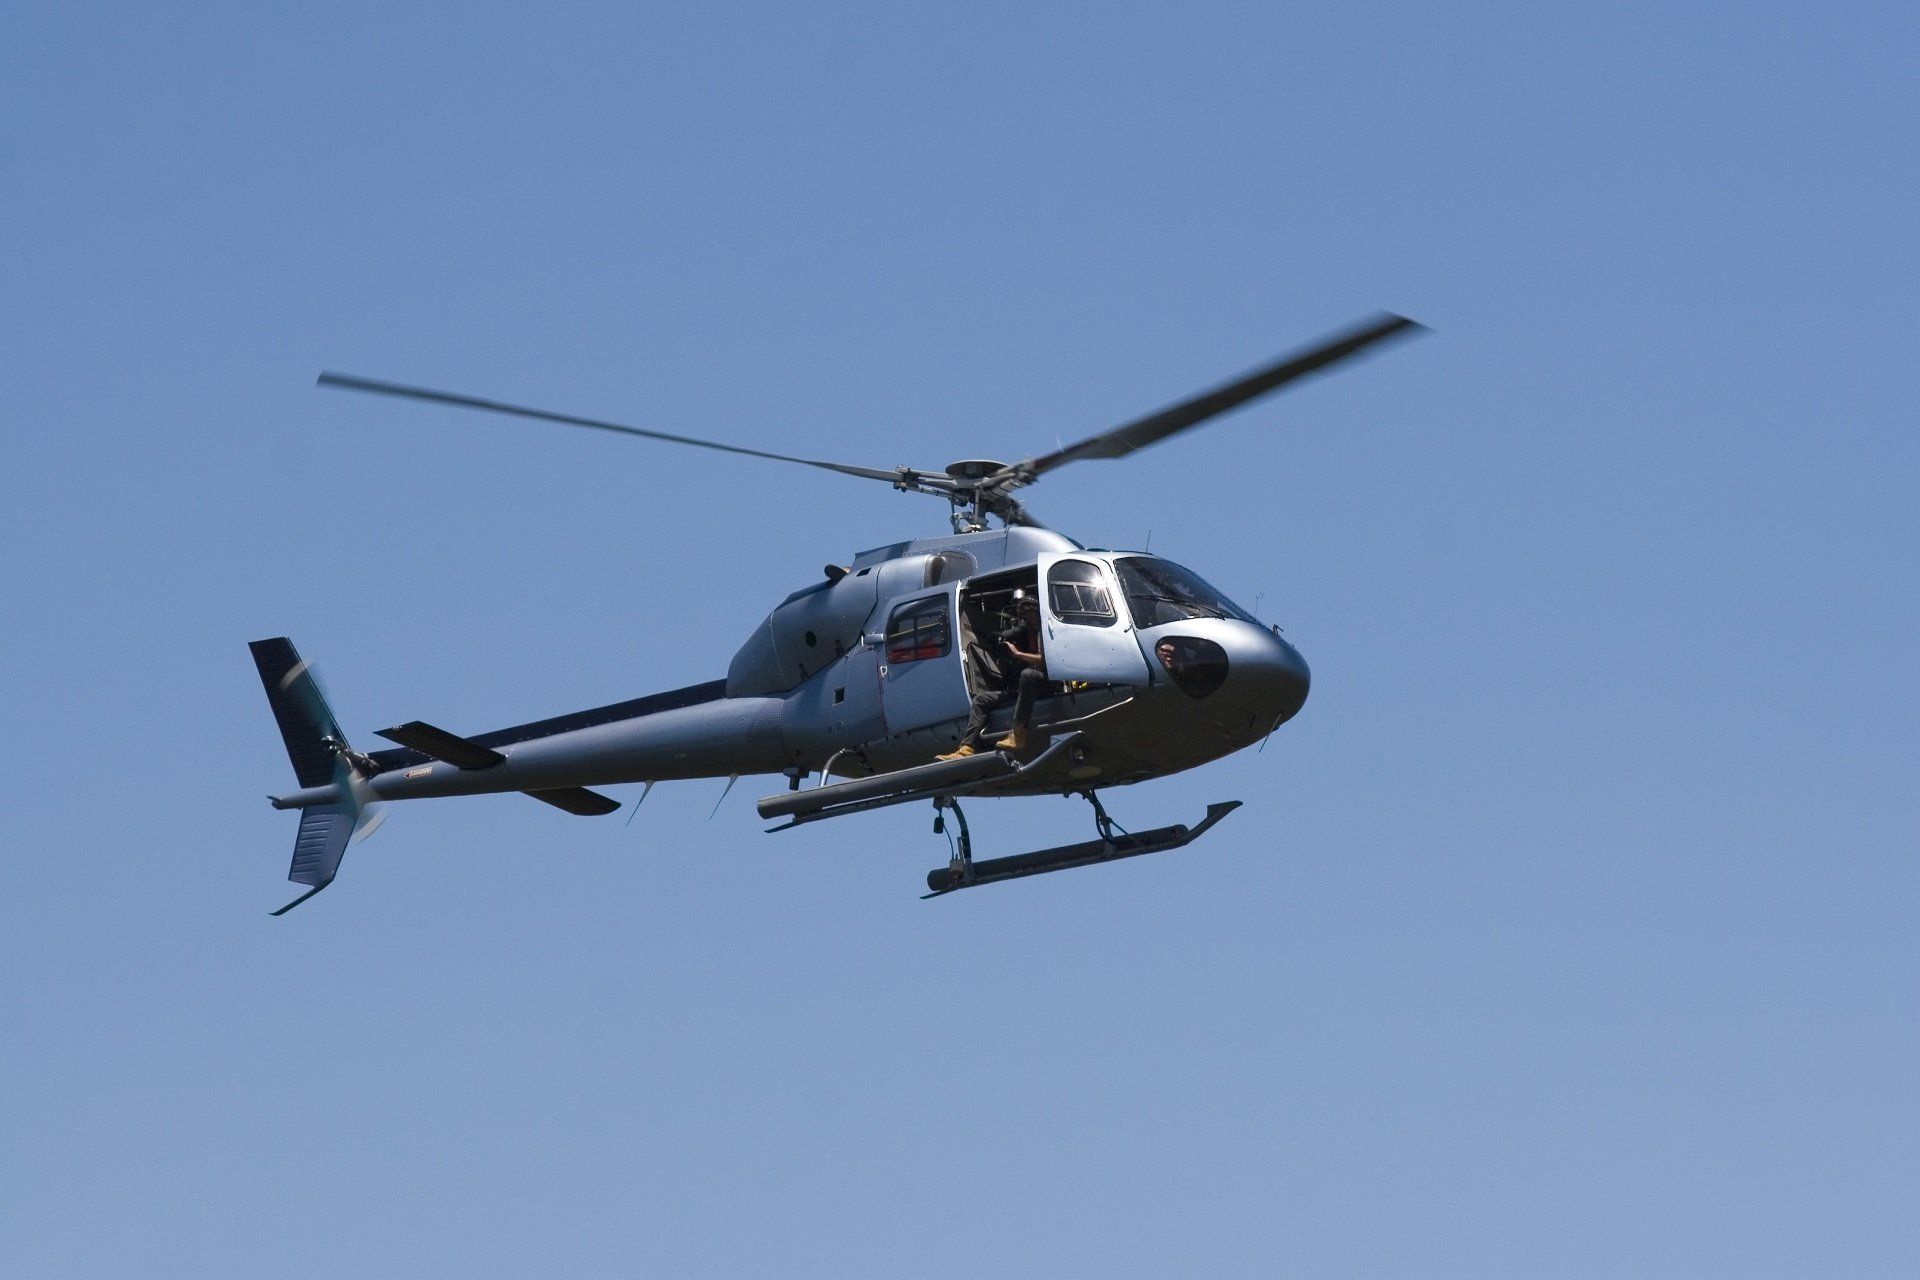 Cameraman On The Chopper - Tucson, AZ - Southwest Heliservices, LLC